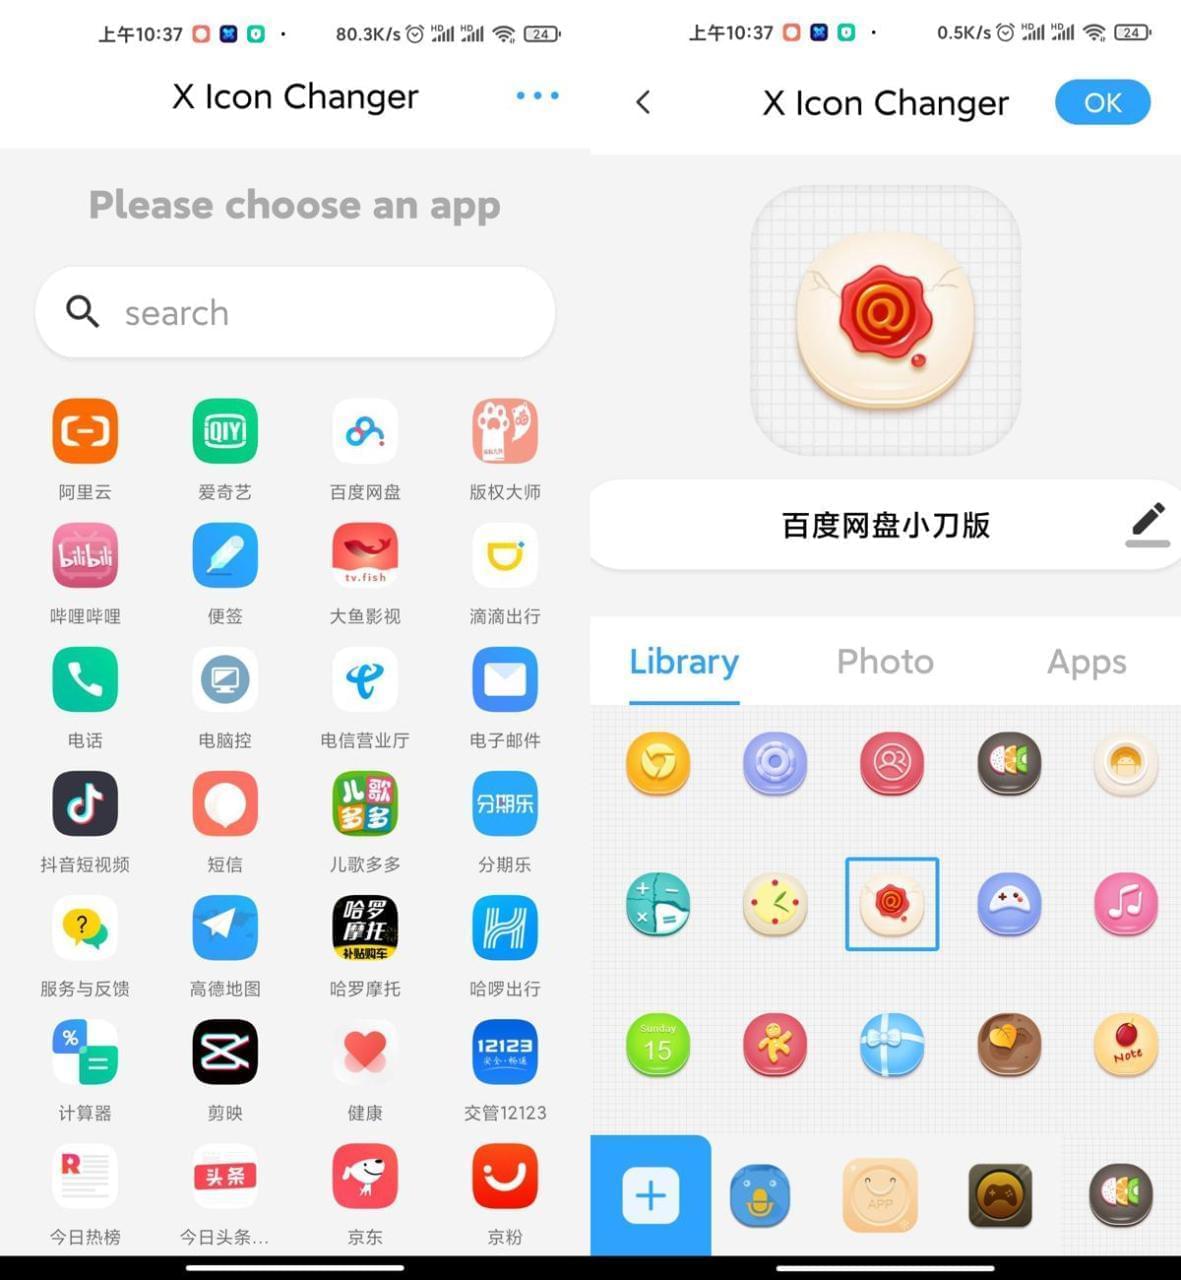 安卓X Icon Changer 1.5.4 使用图标变动东西8787,安卓,icon,使用,图标,变动